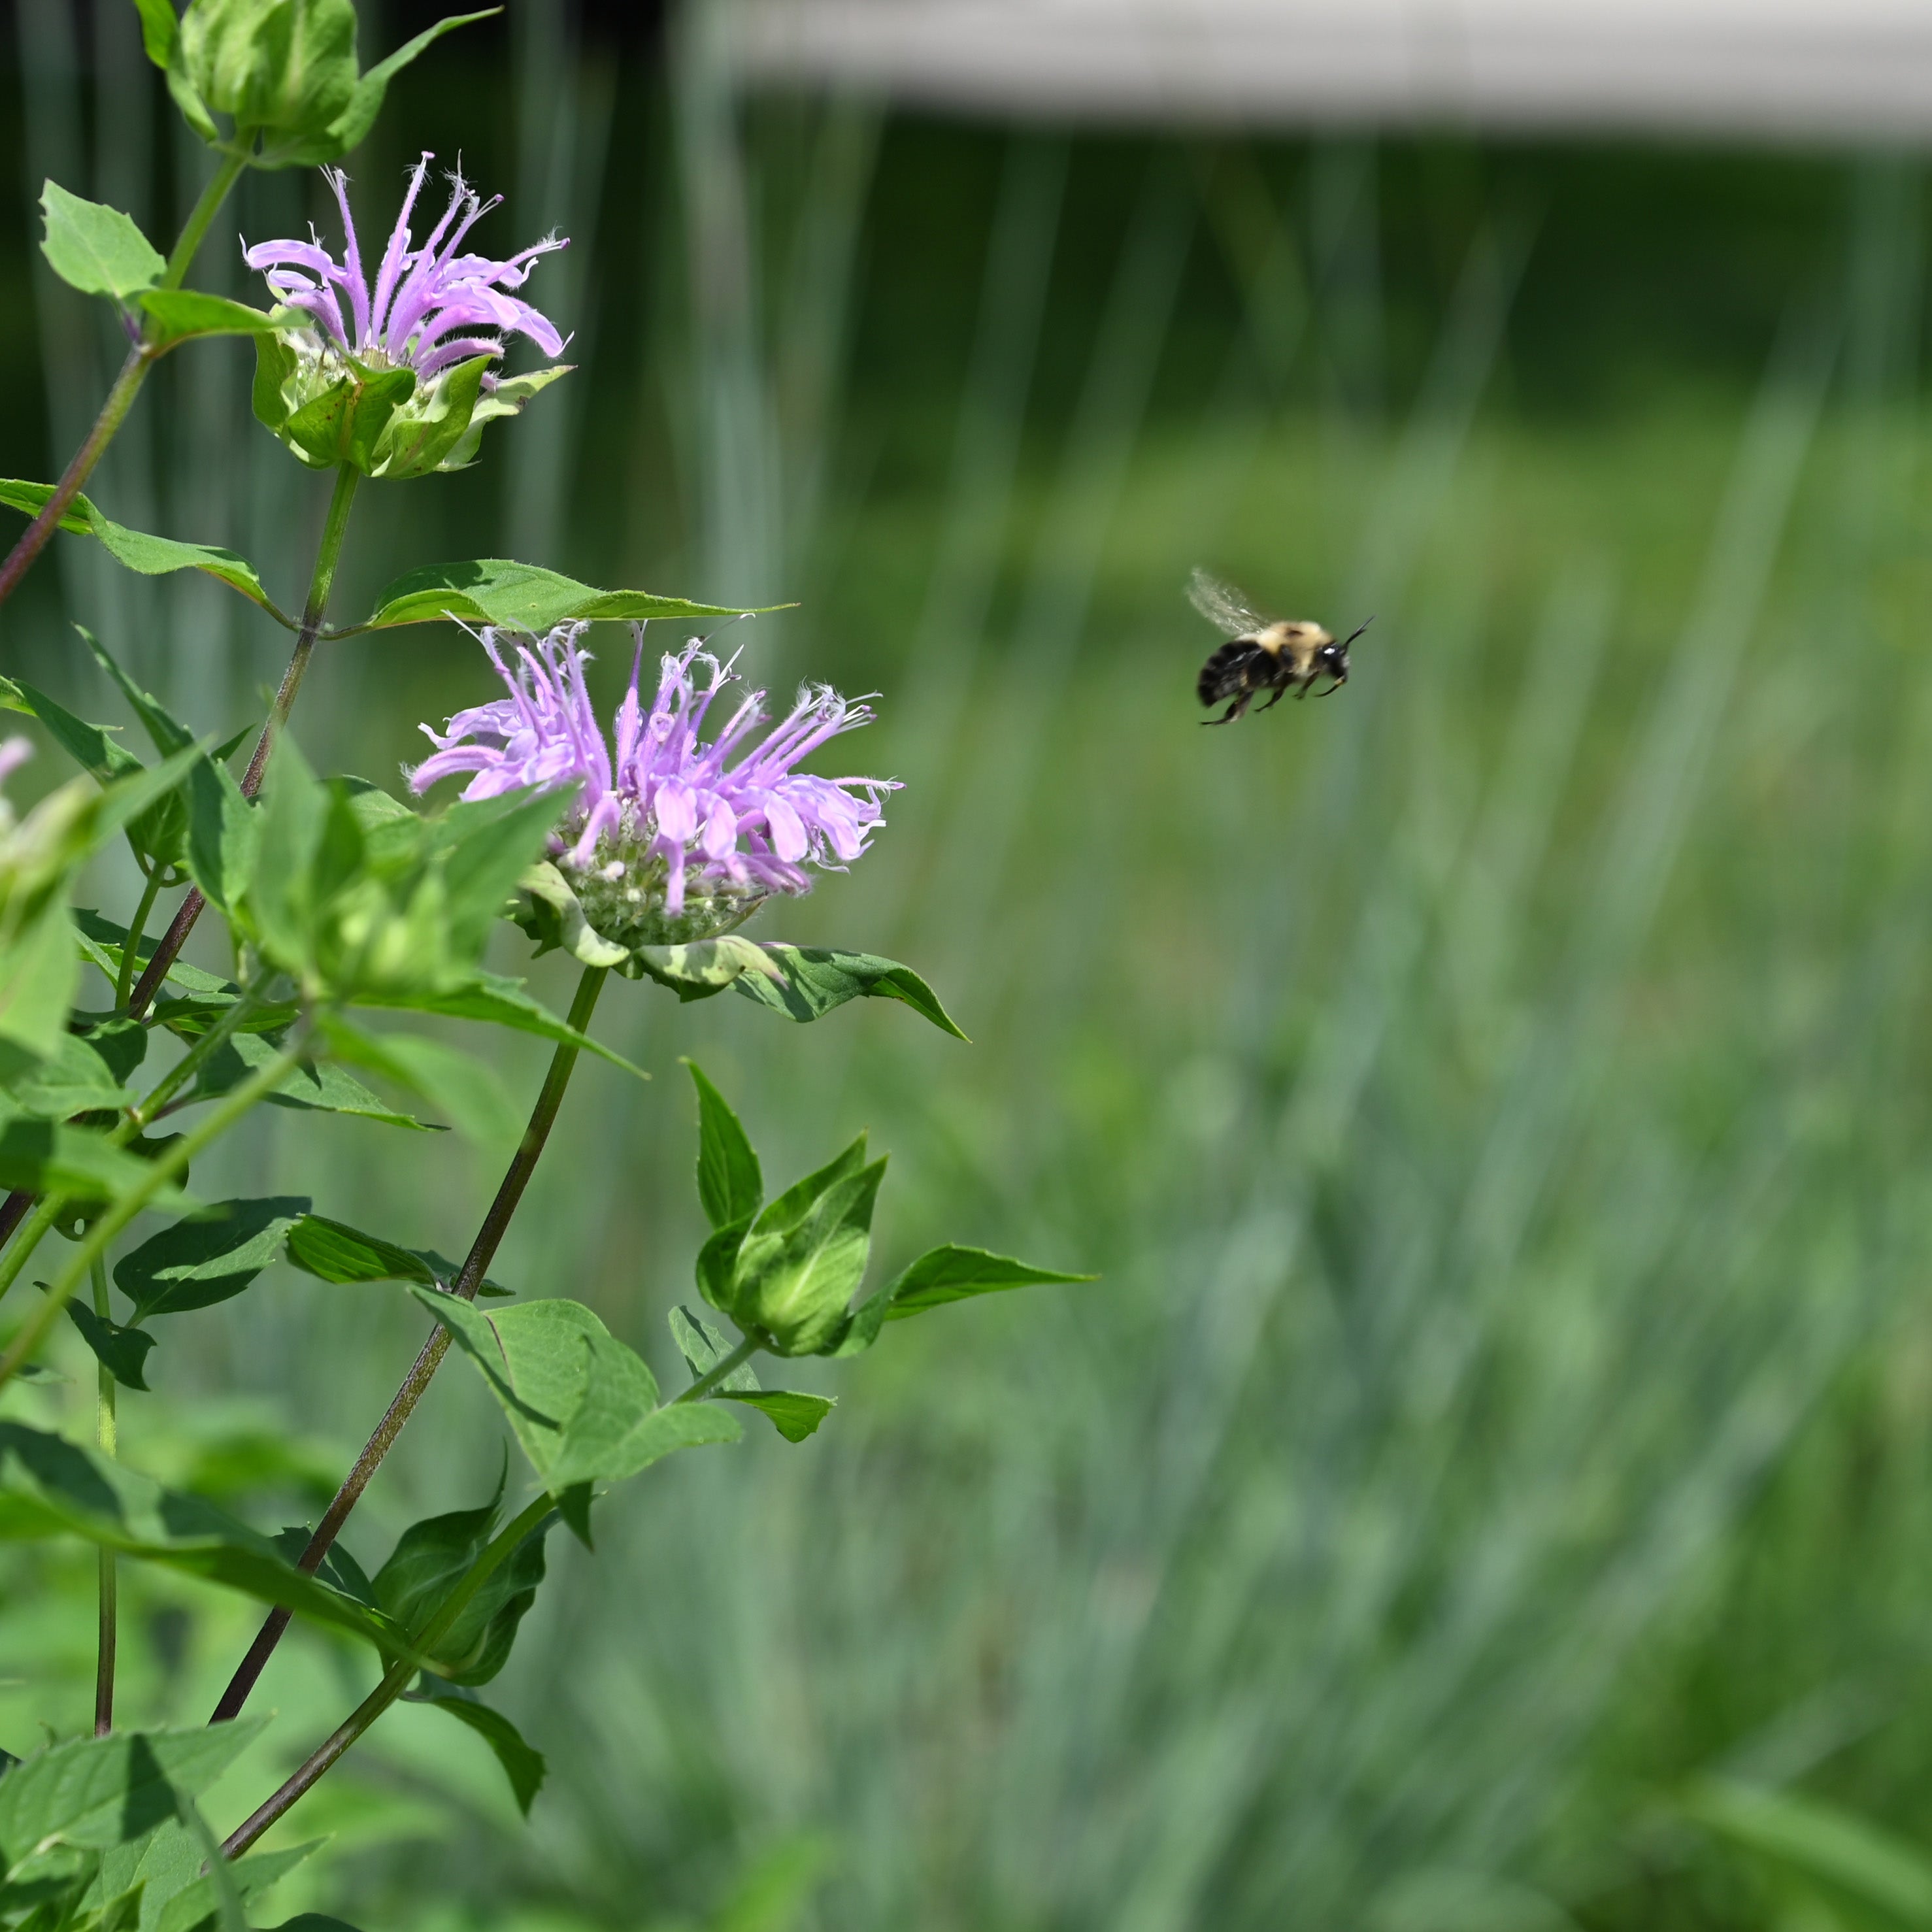 A bee flying away from a purple flower in Grebel's pollinator garden